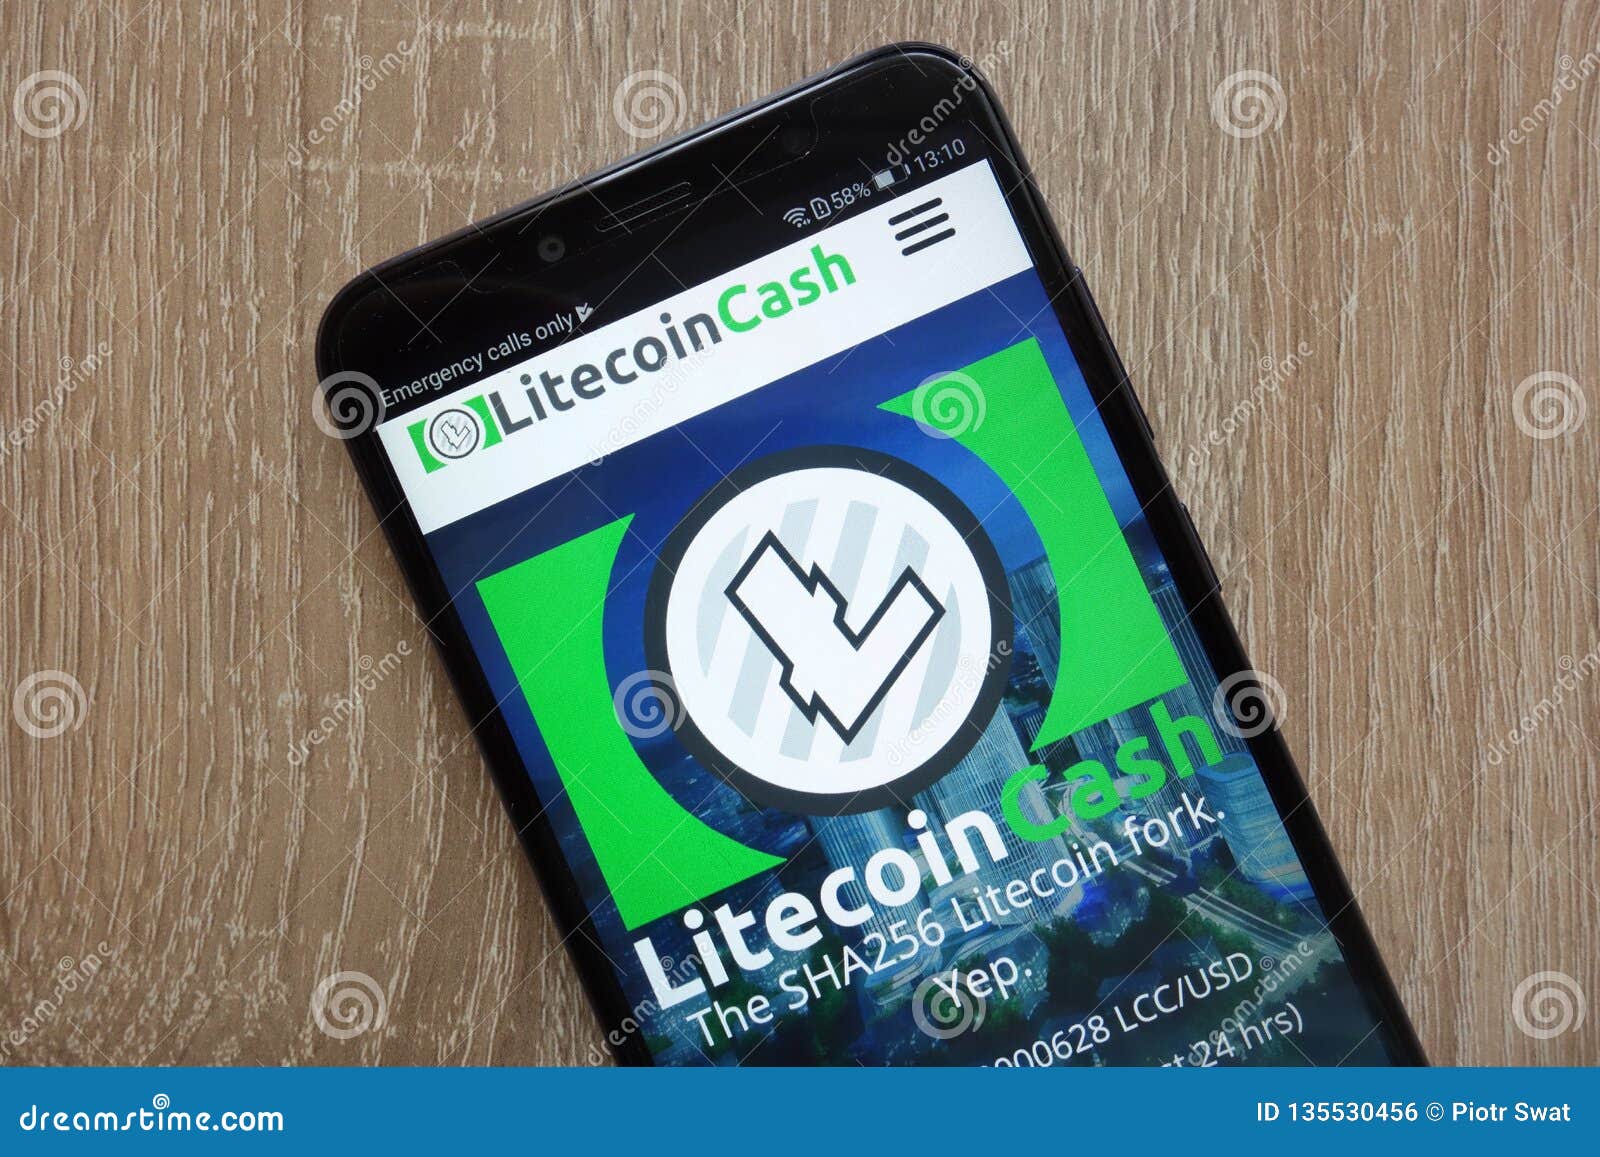 litecoin cash website